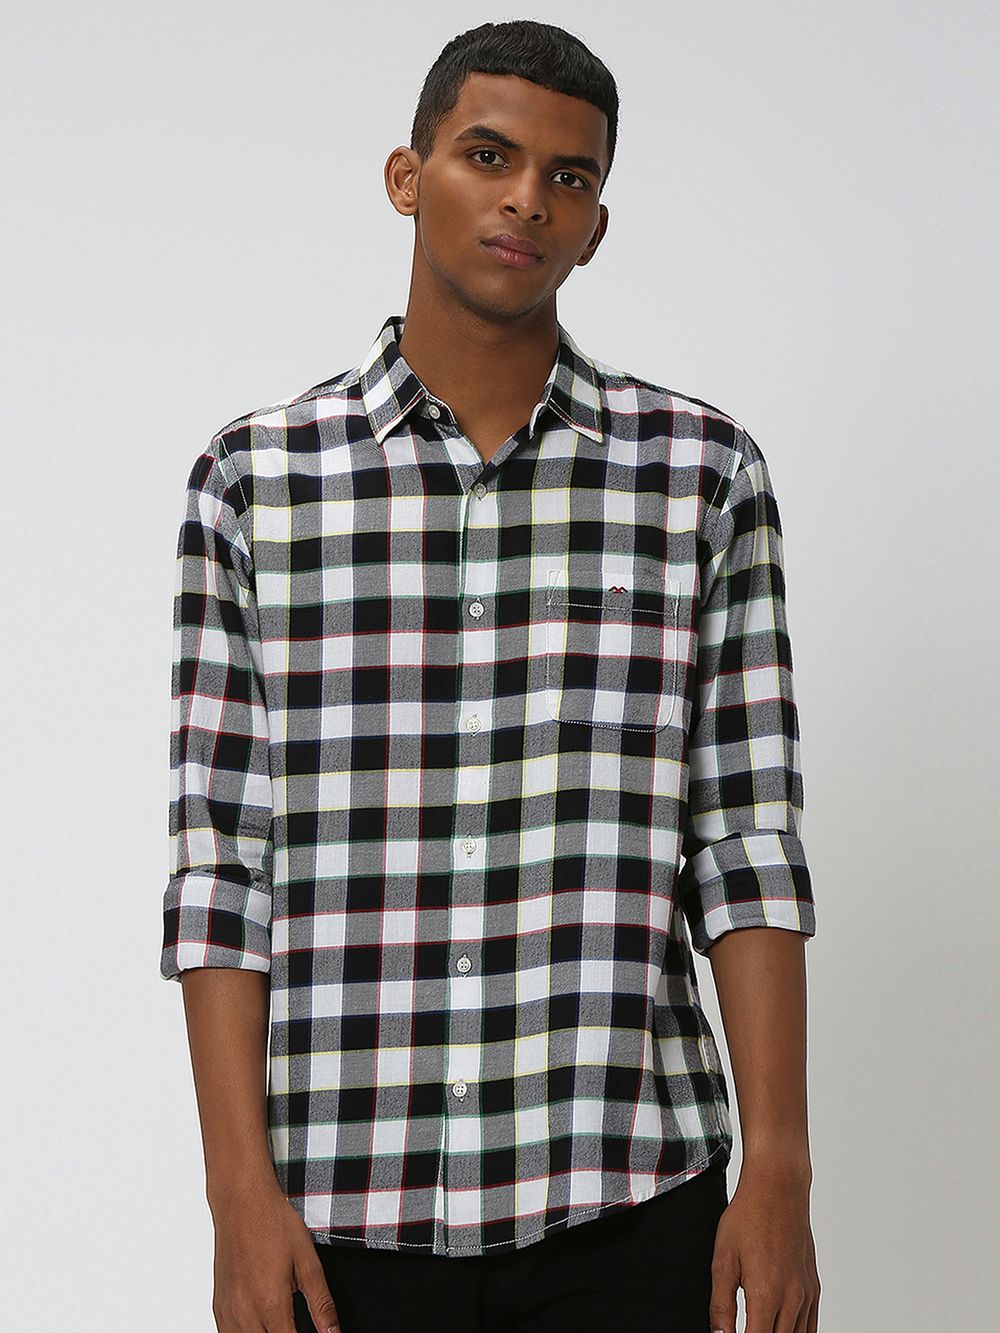 Black & Multi Square Check Shirt